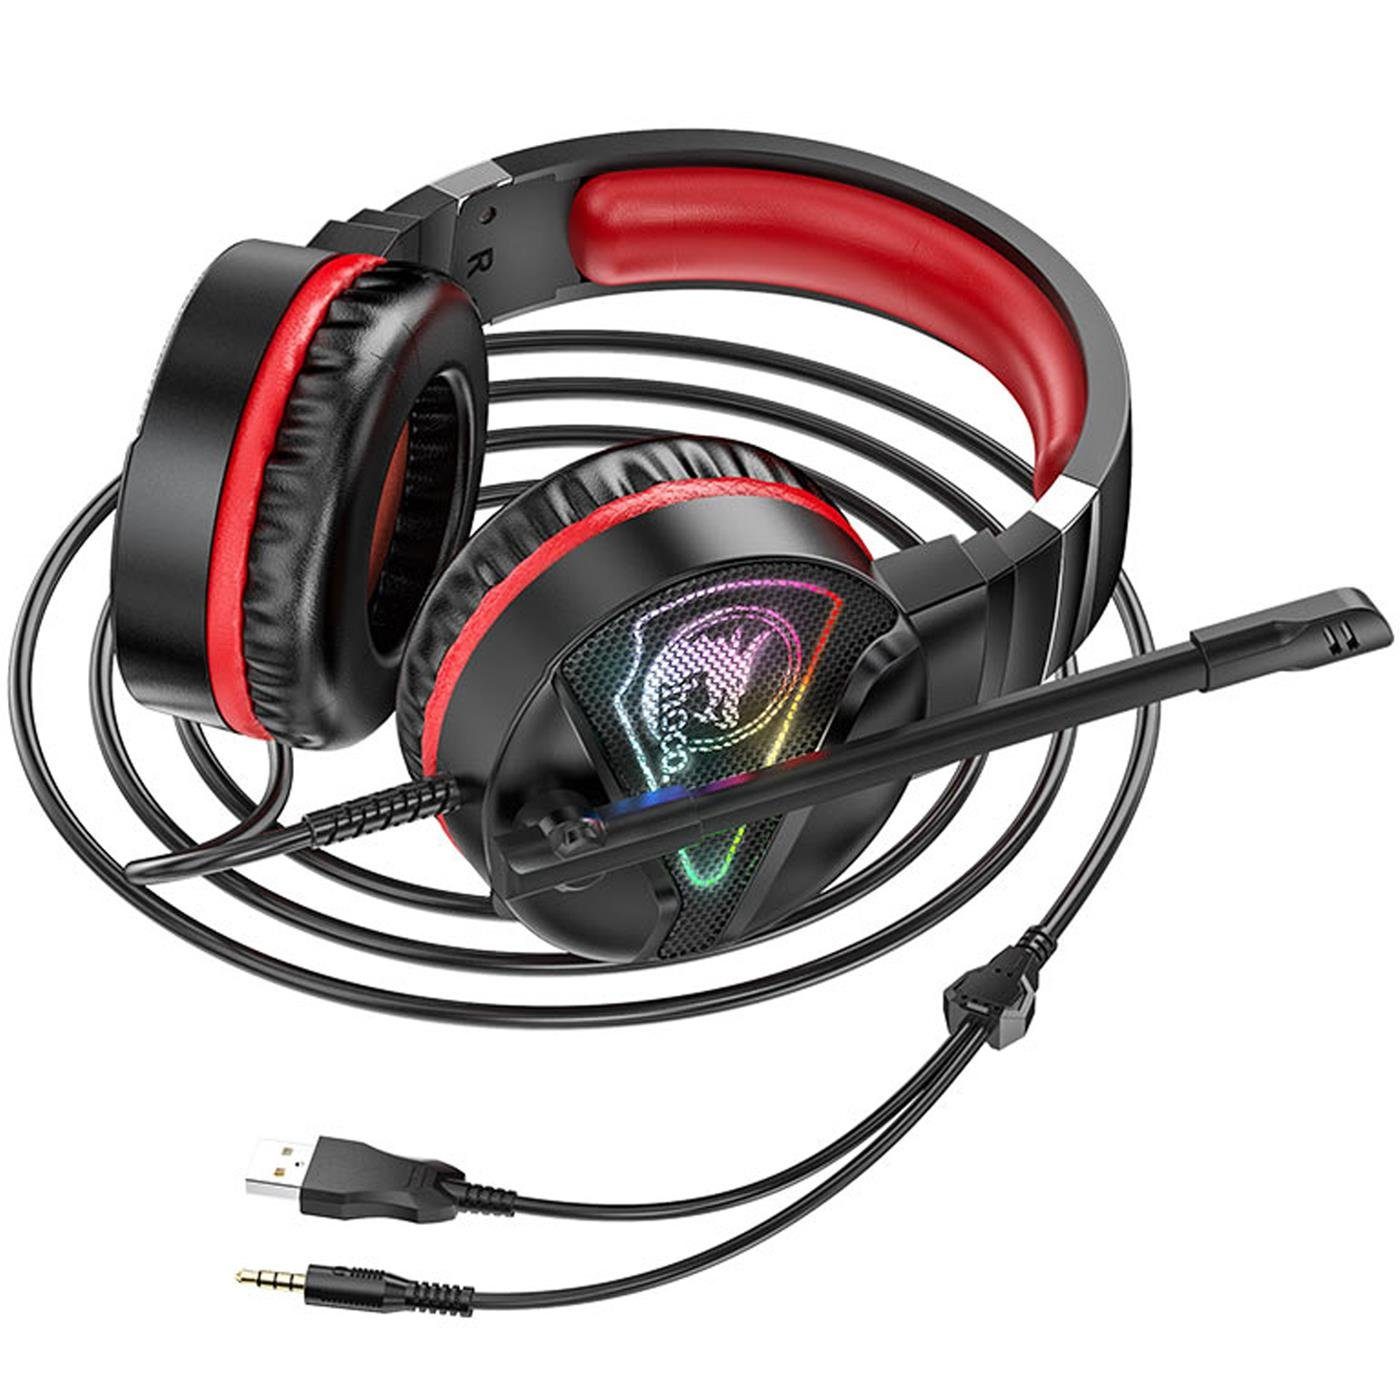 HOCO W104 Gaming PC-Headset (Stylische Stereo Gaming Kopfhörer mit Mikrofon und LED Beleuchtung) Rot